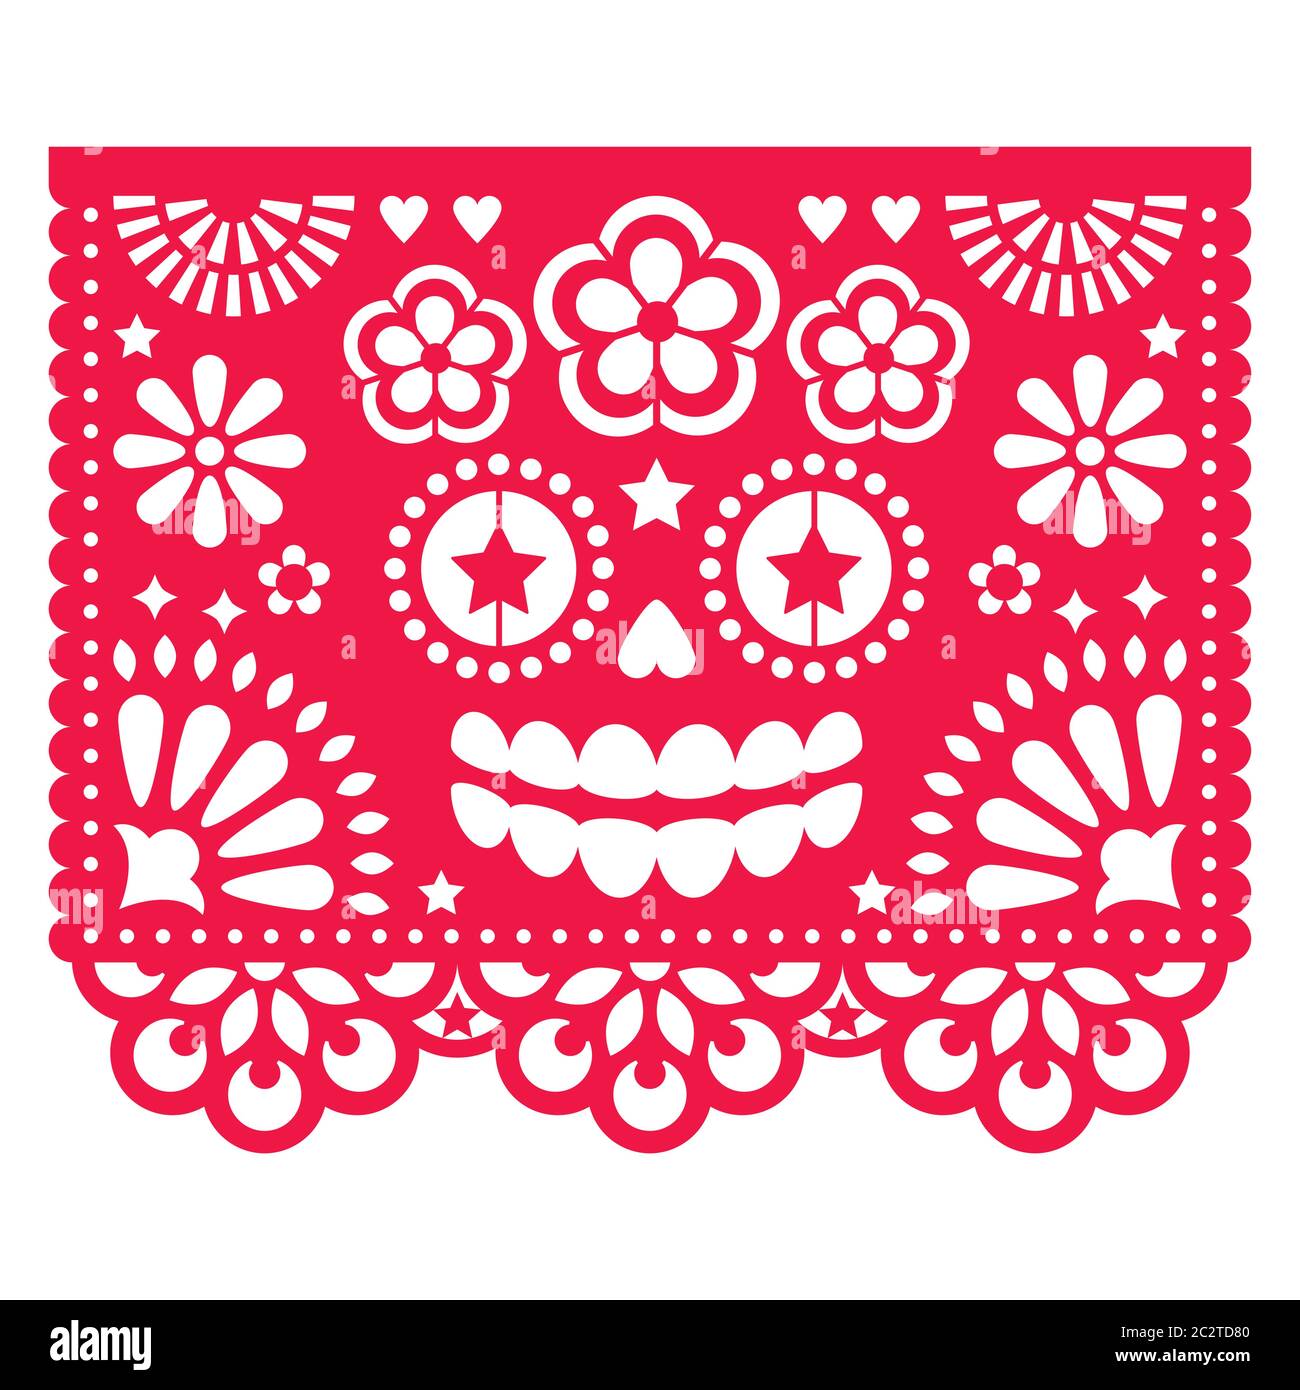 Halloween Papel Picado Design mit La Catrina Totenkopf, mexikanisches Papier ausgeschnittenes Muster - Dia de Los Muertos, Tag der Toten Feier Stock Vektor